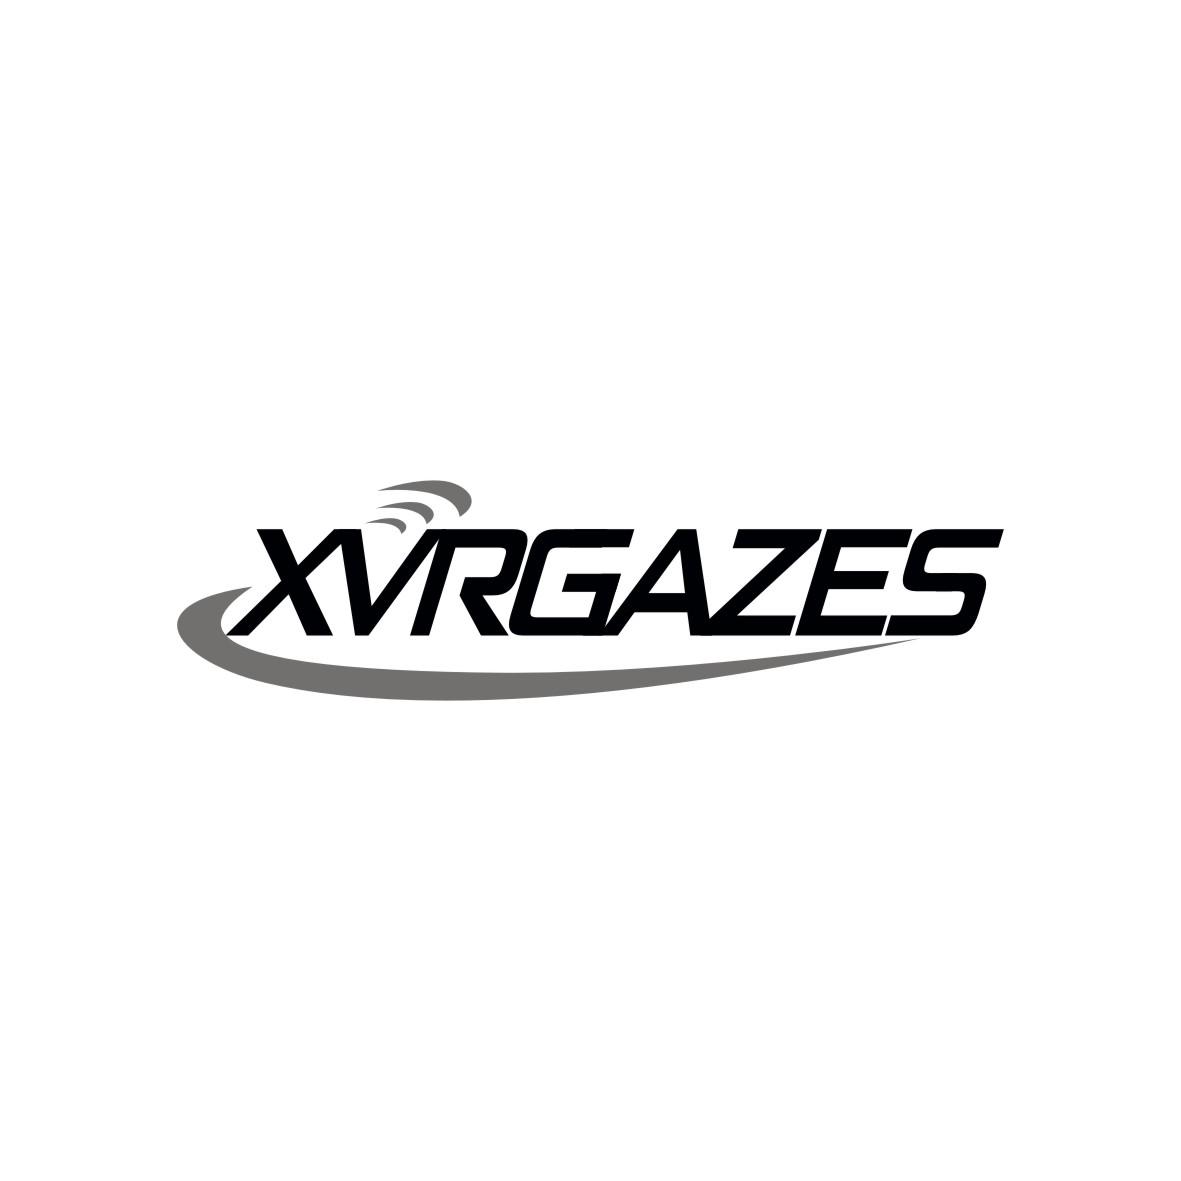 XVRGAZES商标转让